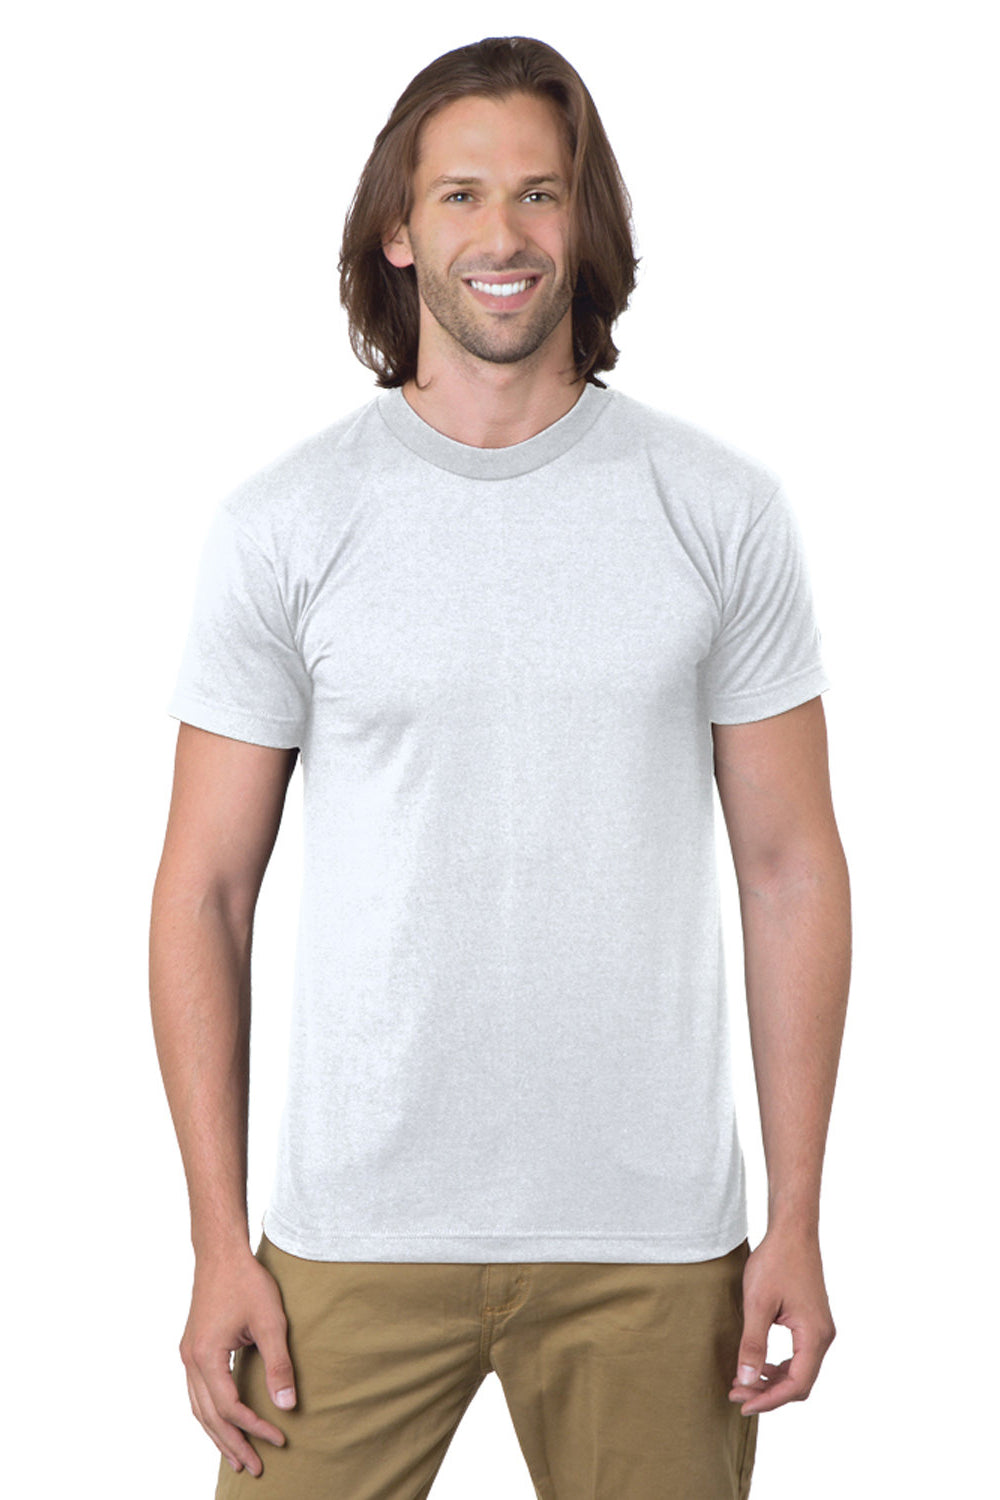 Bayside 1701 Mens USA Made Short Sleeve Crewneck T-Shirt White Model Front